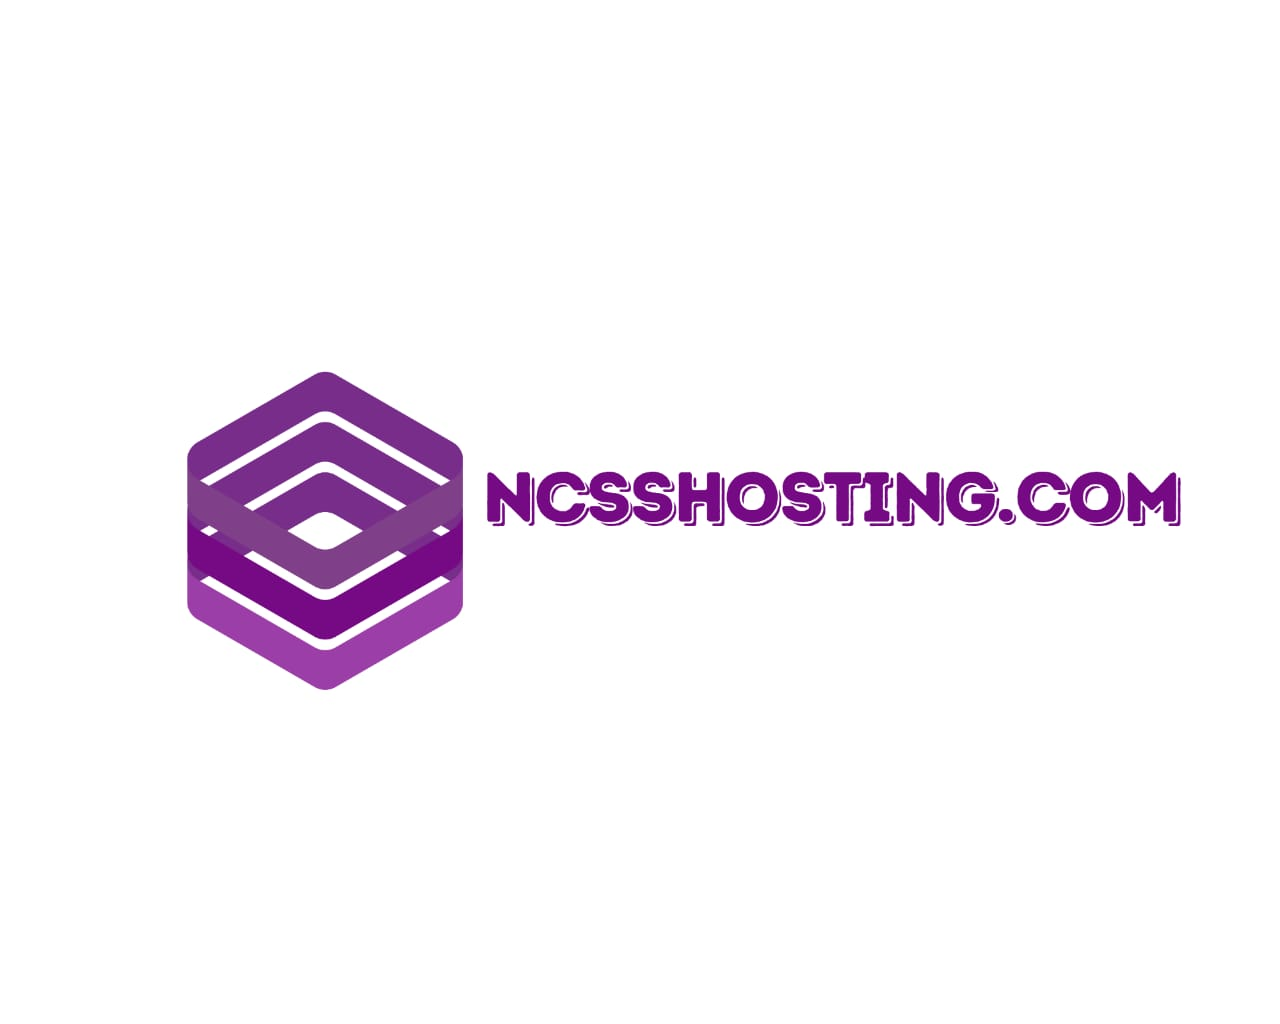 NCSS Hosting